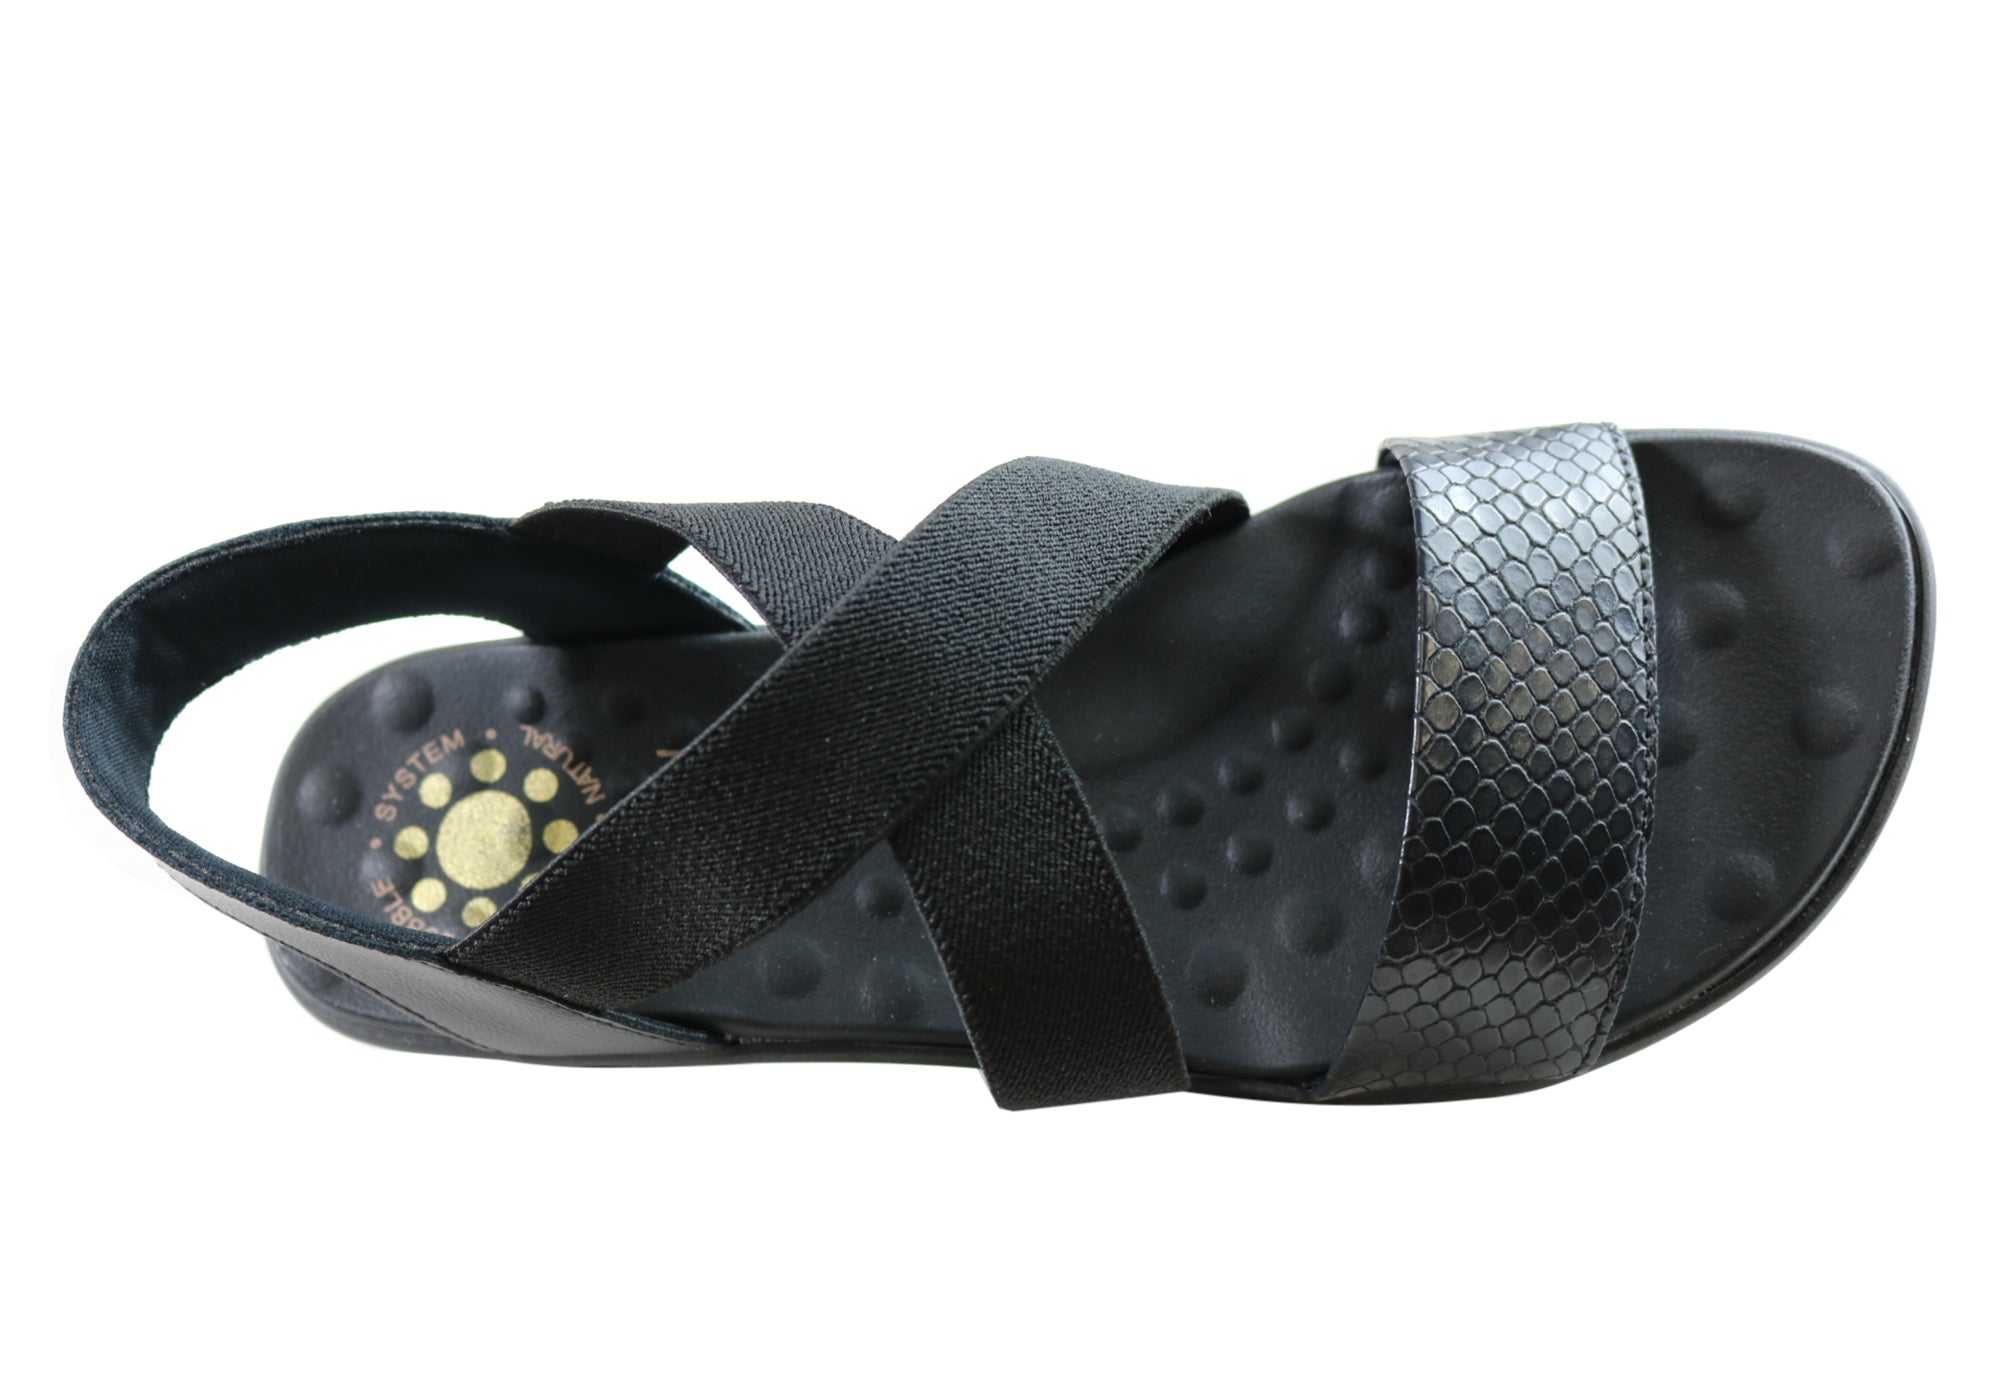 Malu Supercomfort Armelle Womens Comfortable Sandals Made In Brazil